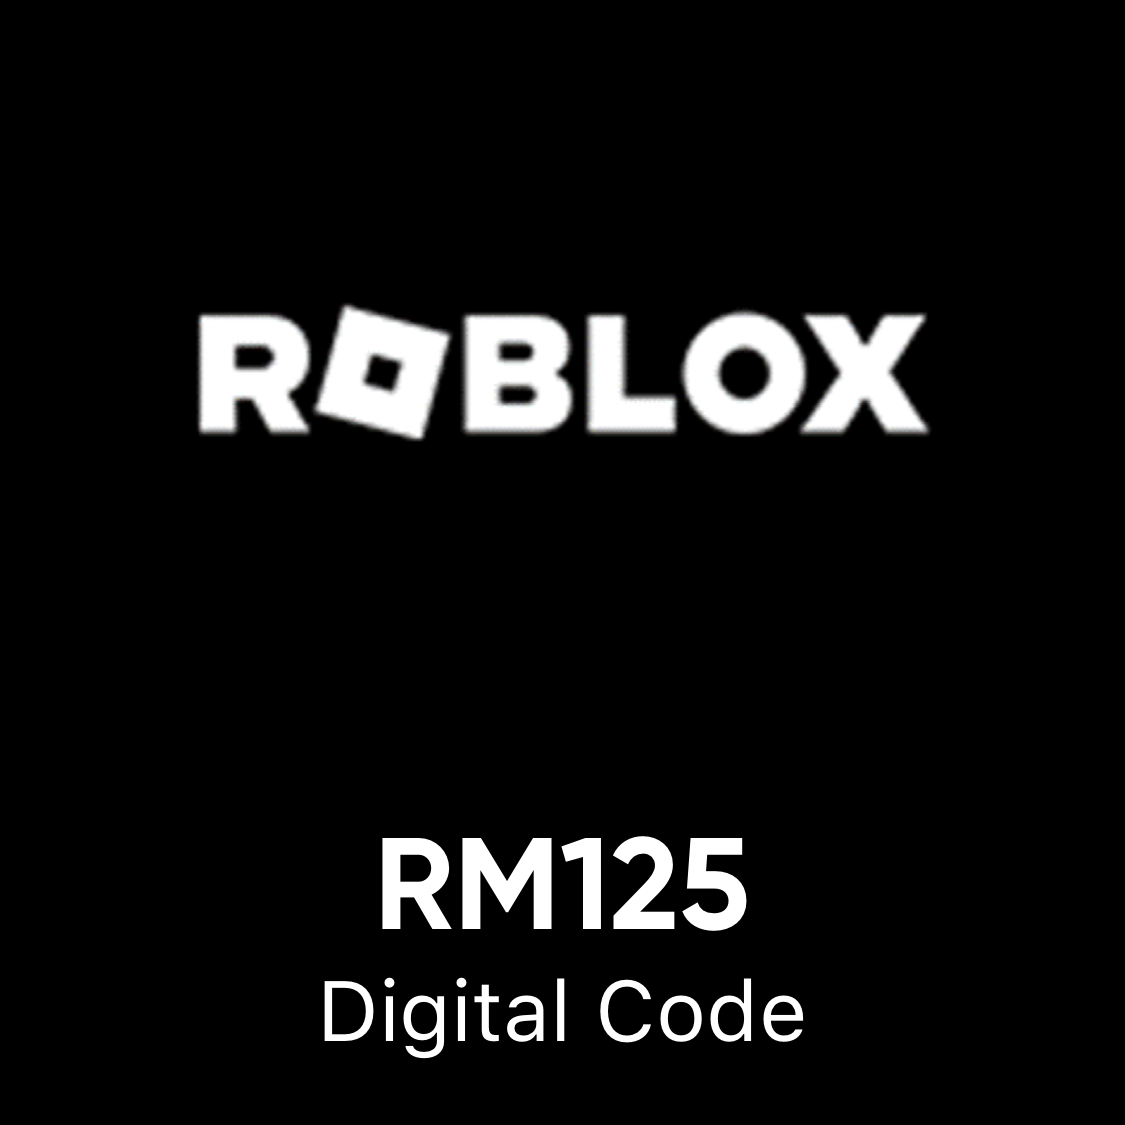 roblox-rm125-digitalcode.png